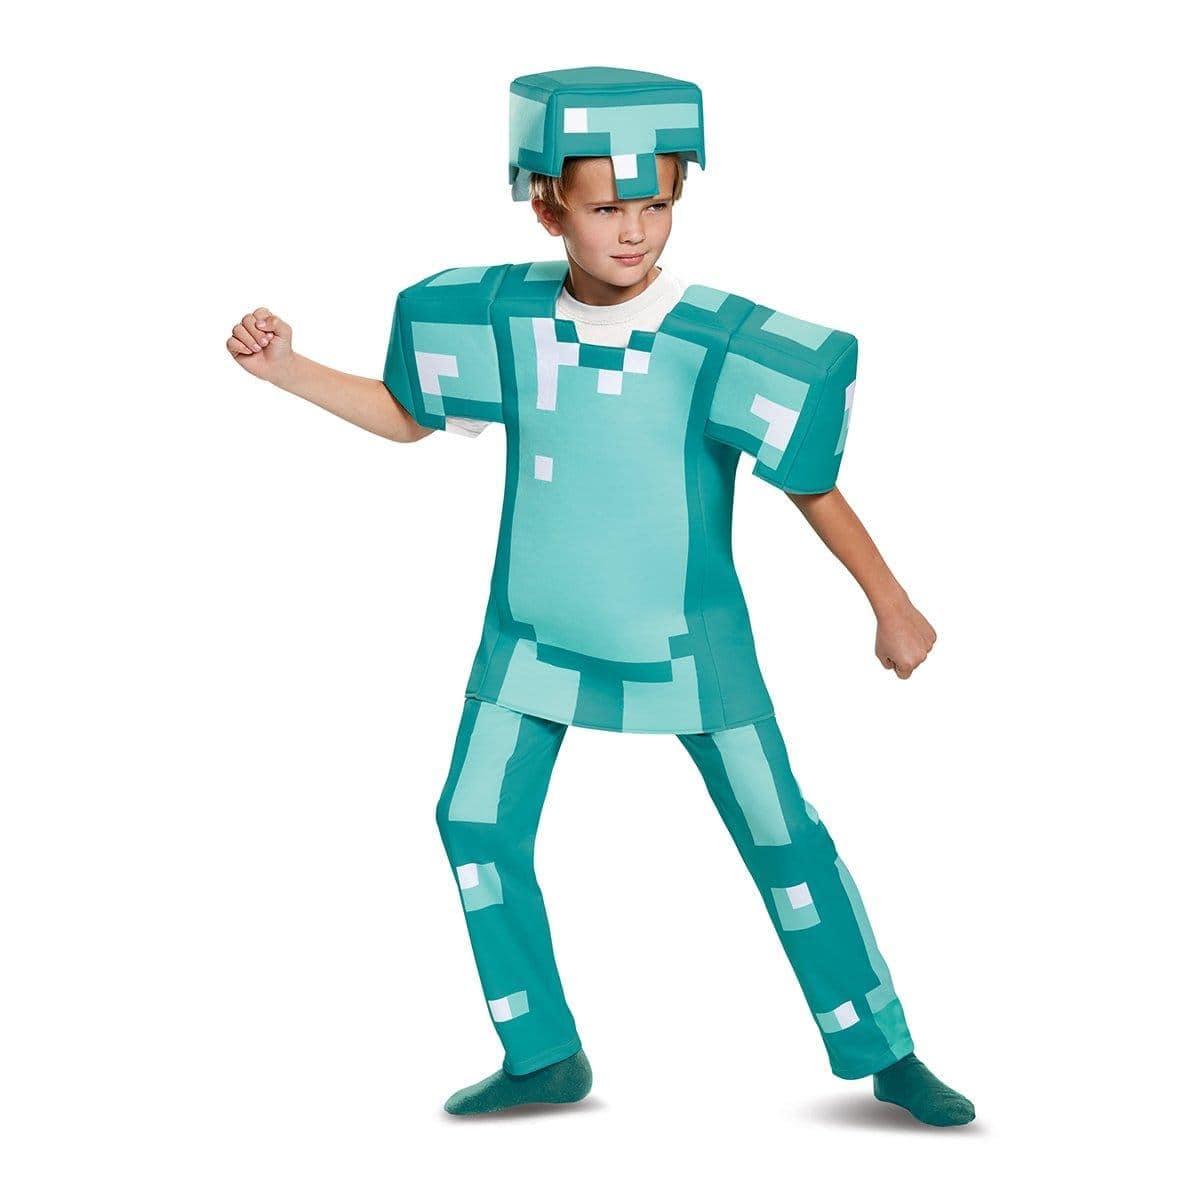 Diamond Deluxe Armor Costume for Kids, Minecraft